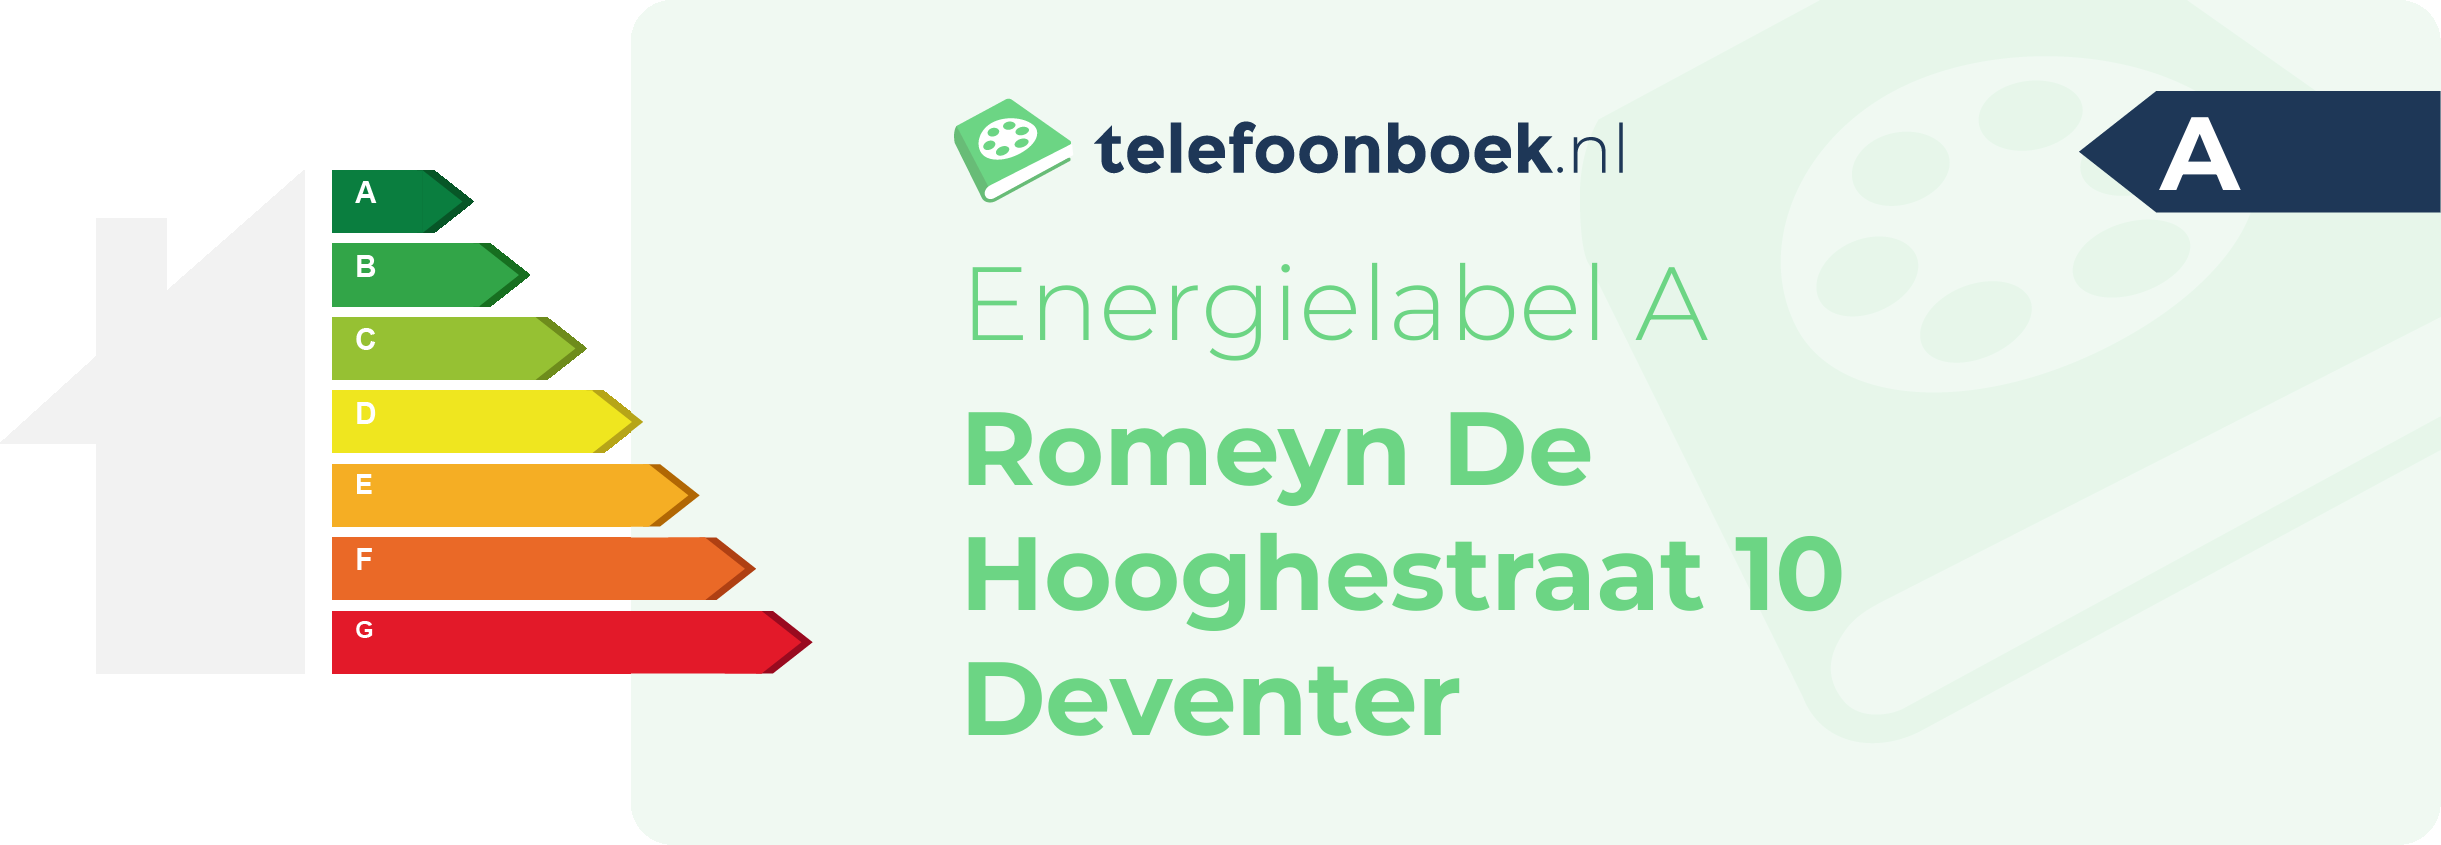 Energielabel Romeyn De Hooghestraat 10 Deventer